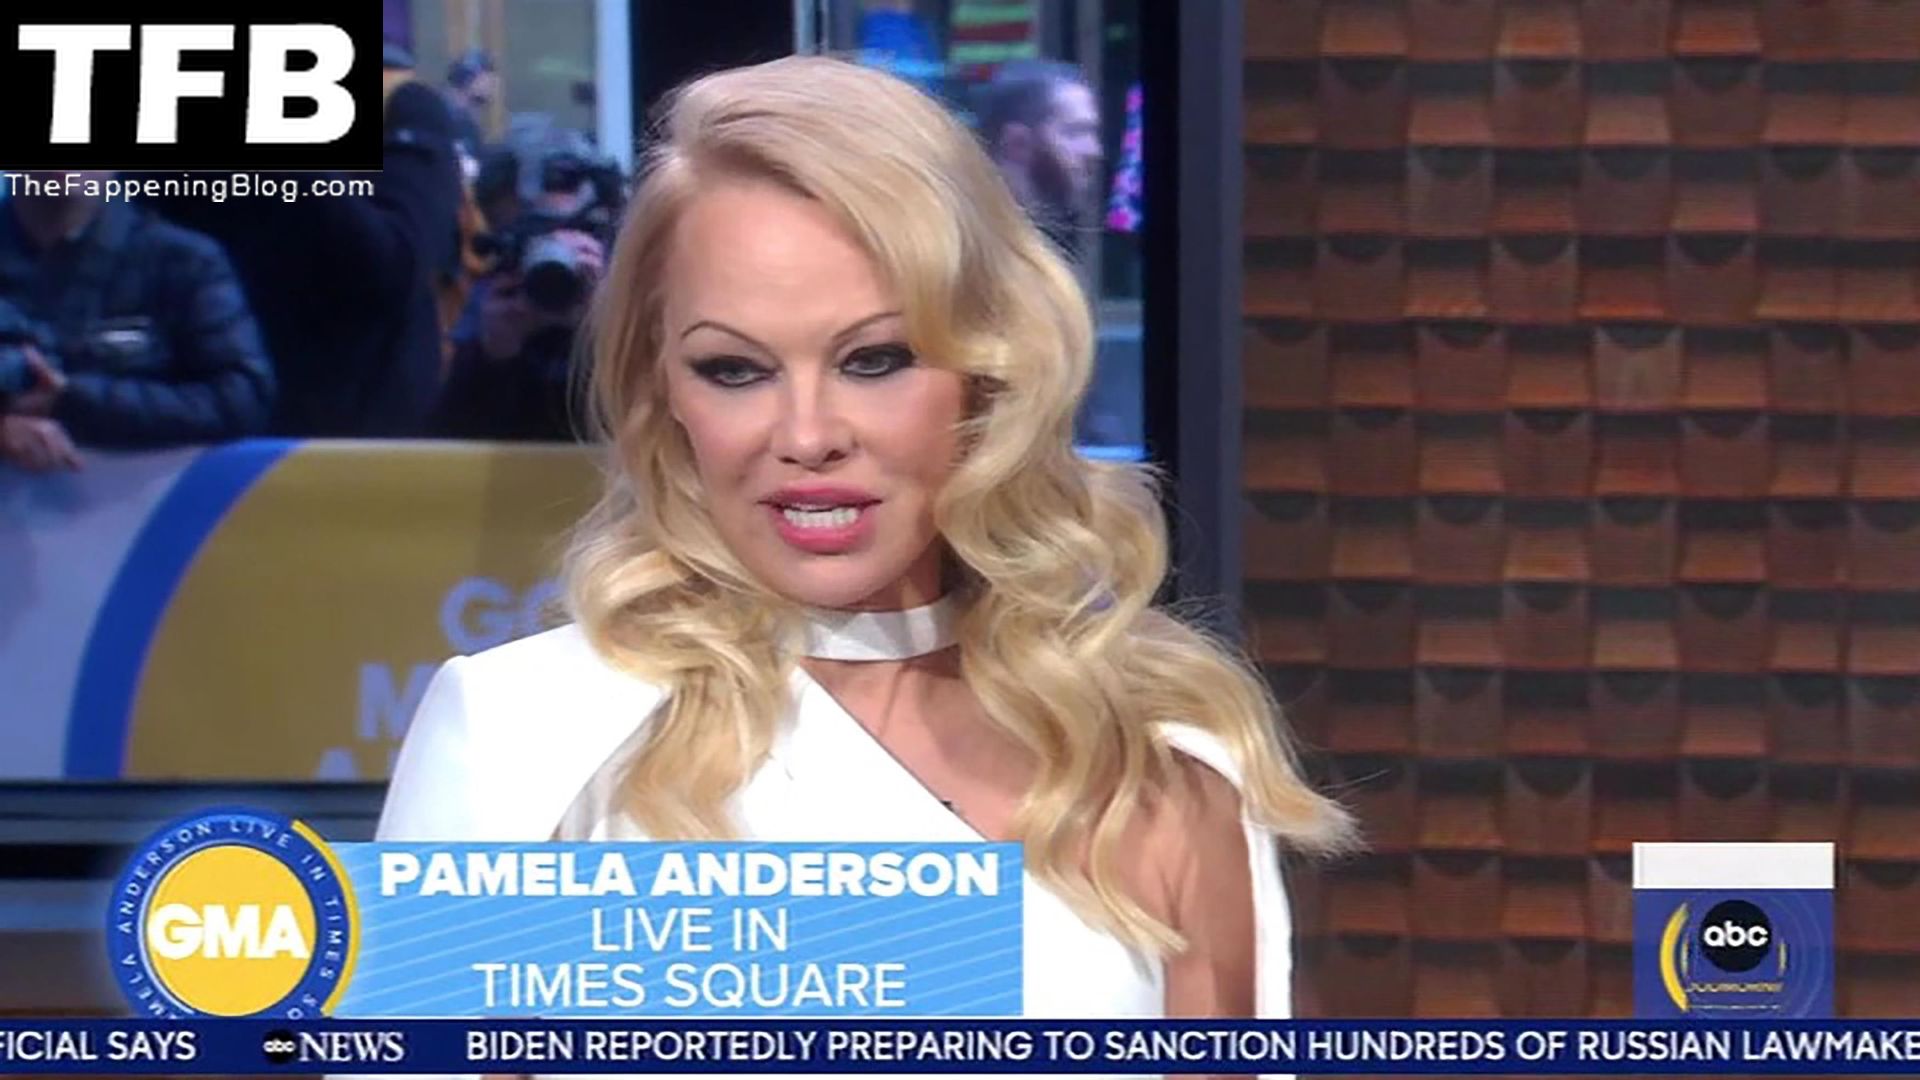 Pamela-Anderson-Hot-The-Fappening-Blog-24.jpg